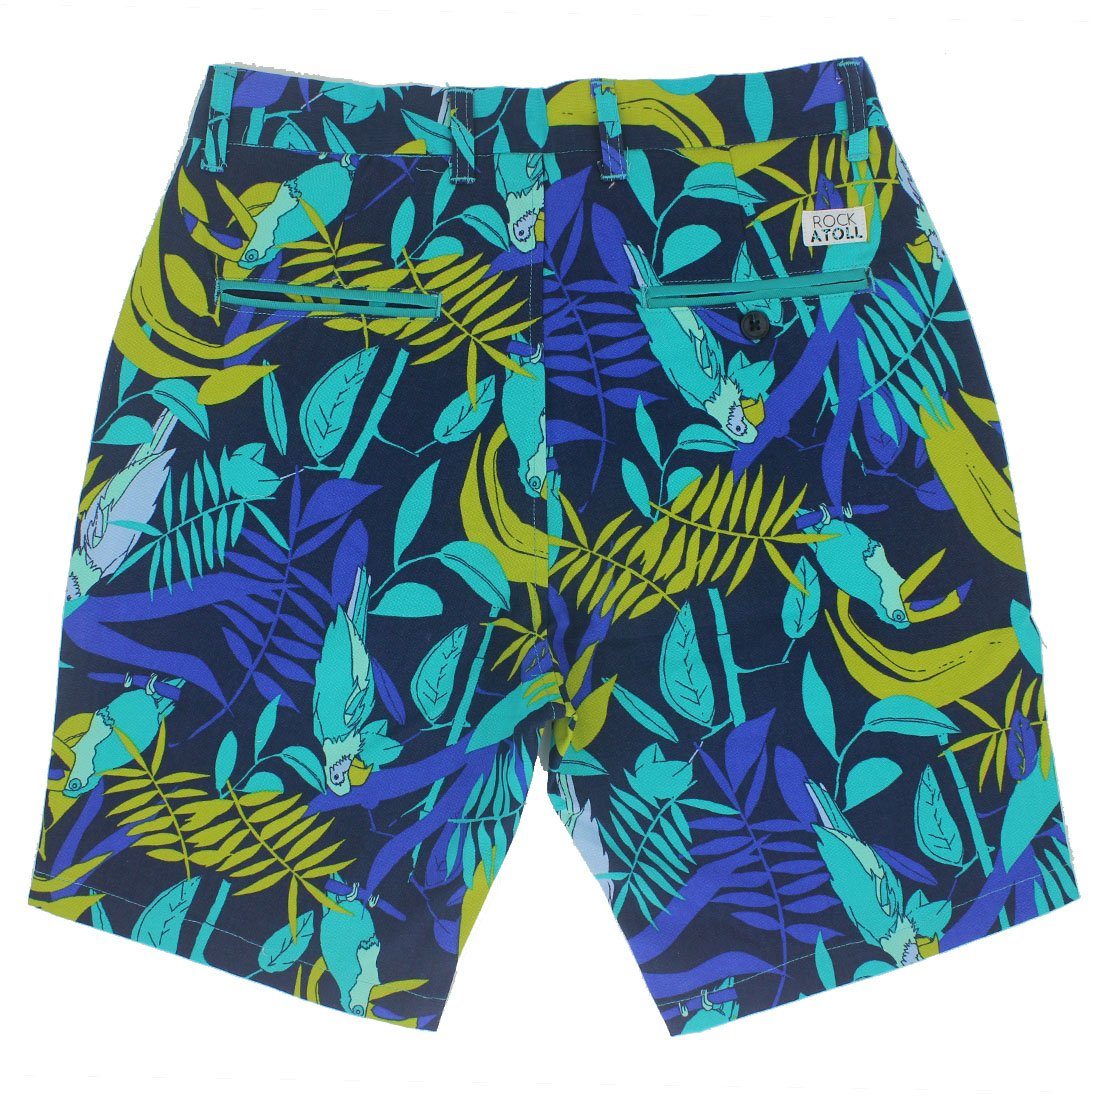 Bird Shorts For Men. Men's Parrot Shorts. Mens Toucan Shorts – Rock Atoll